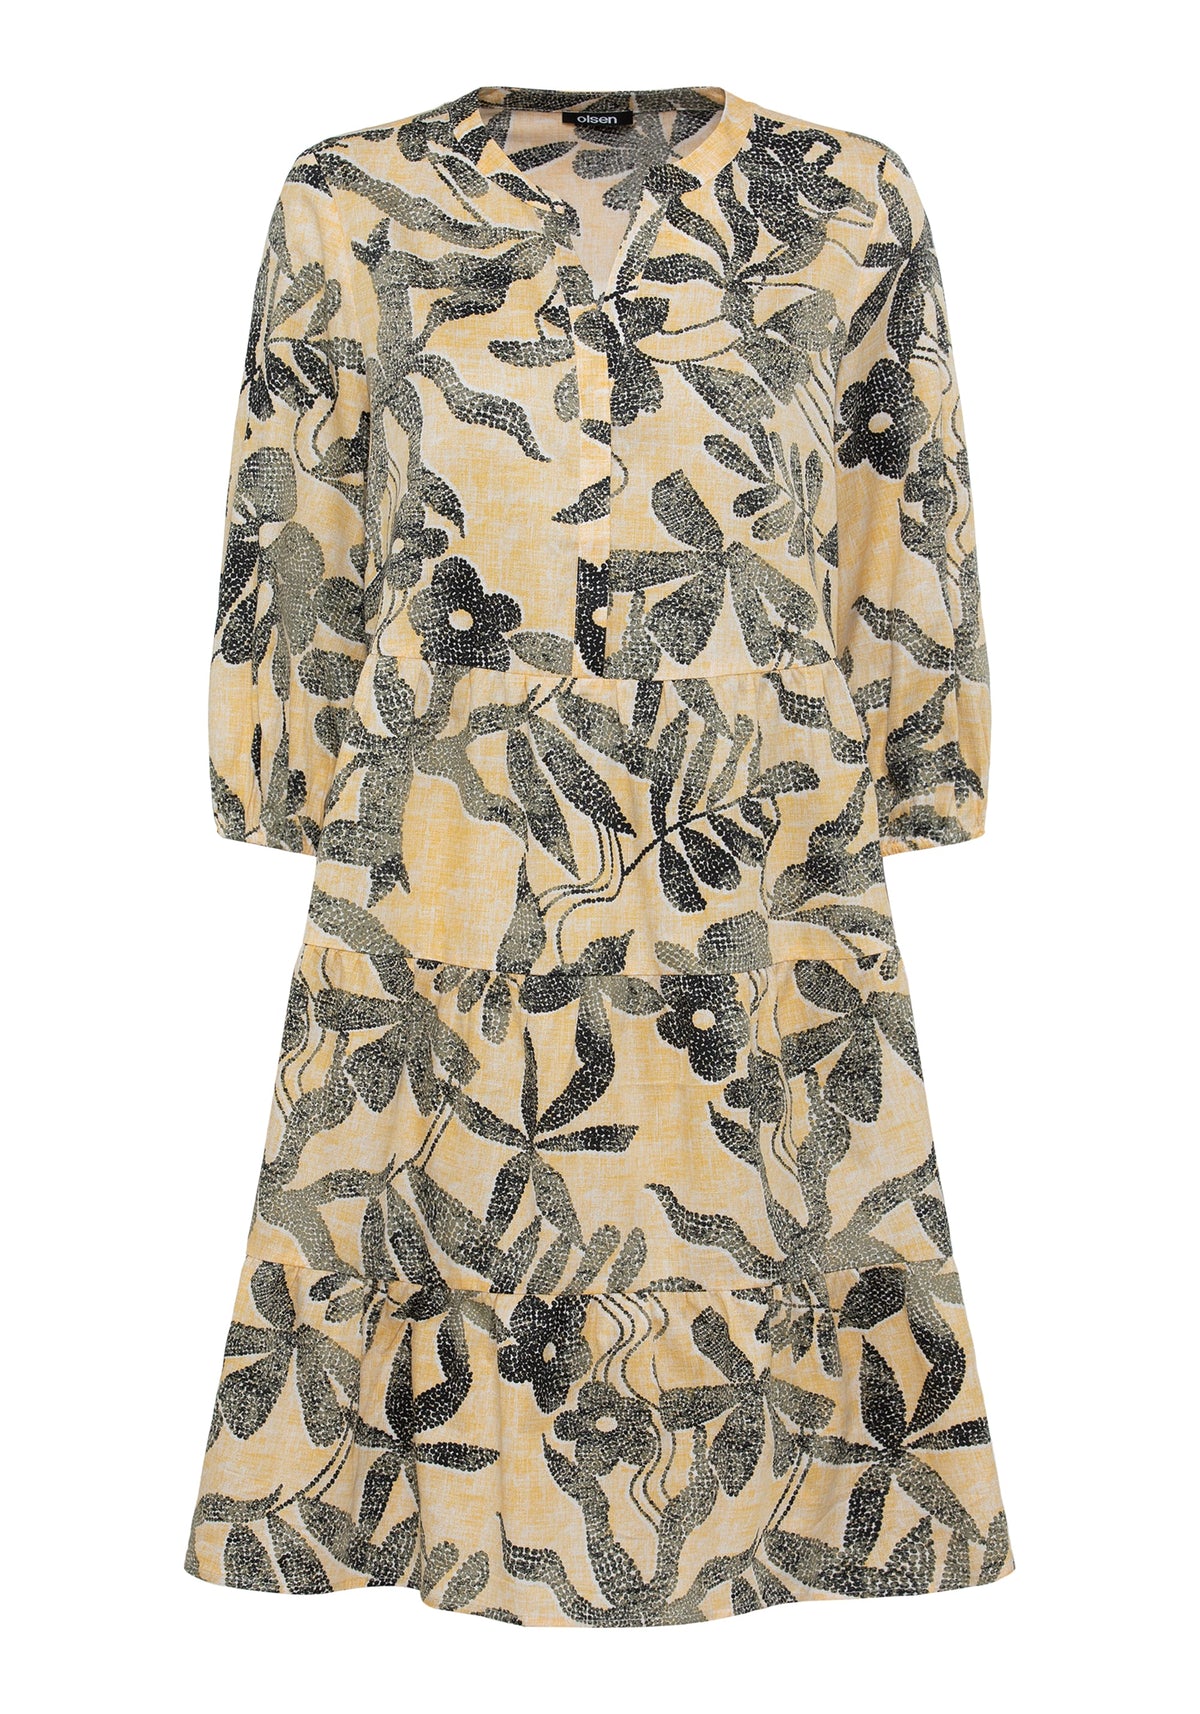 100% Cotton 3/4 Sleeve Jungle Leaf Print Tiered Tunic Dress